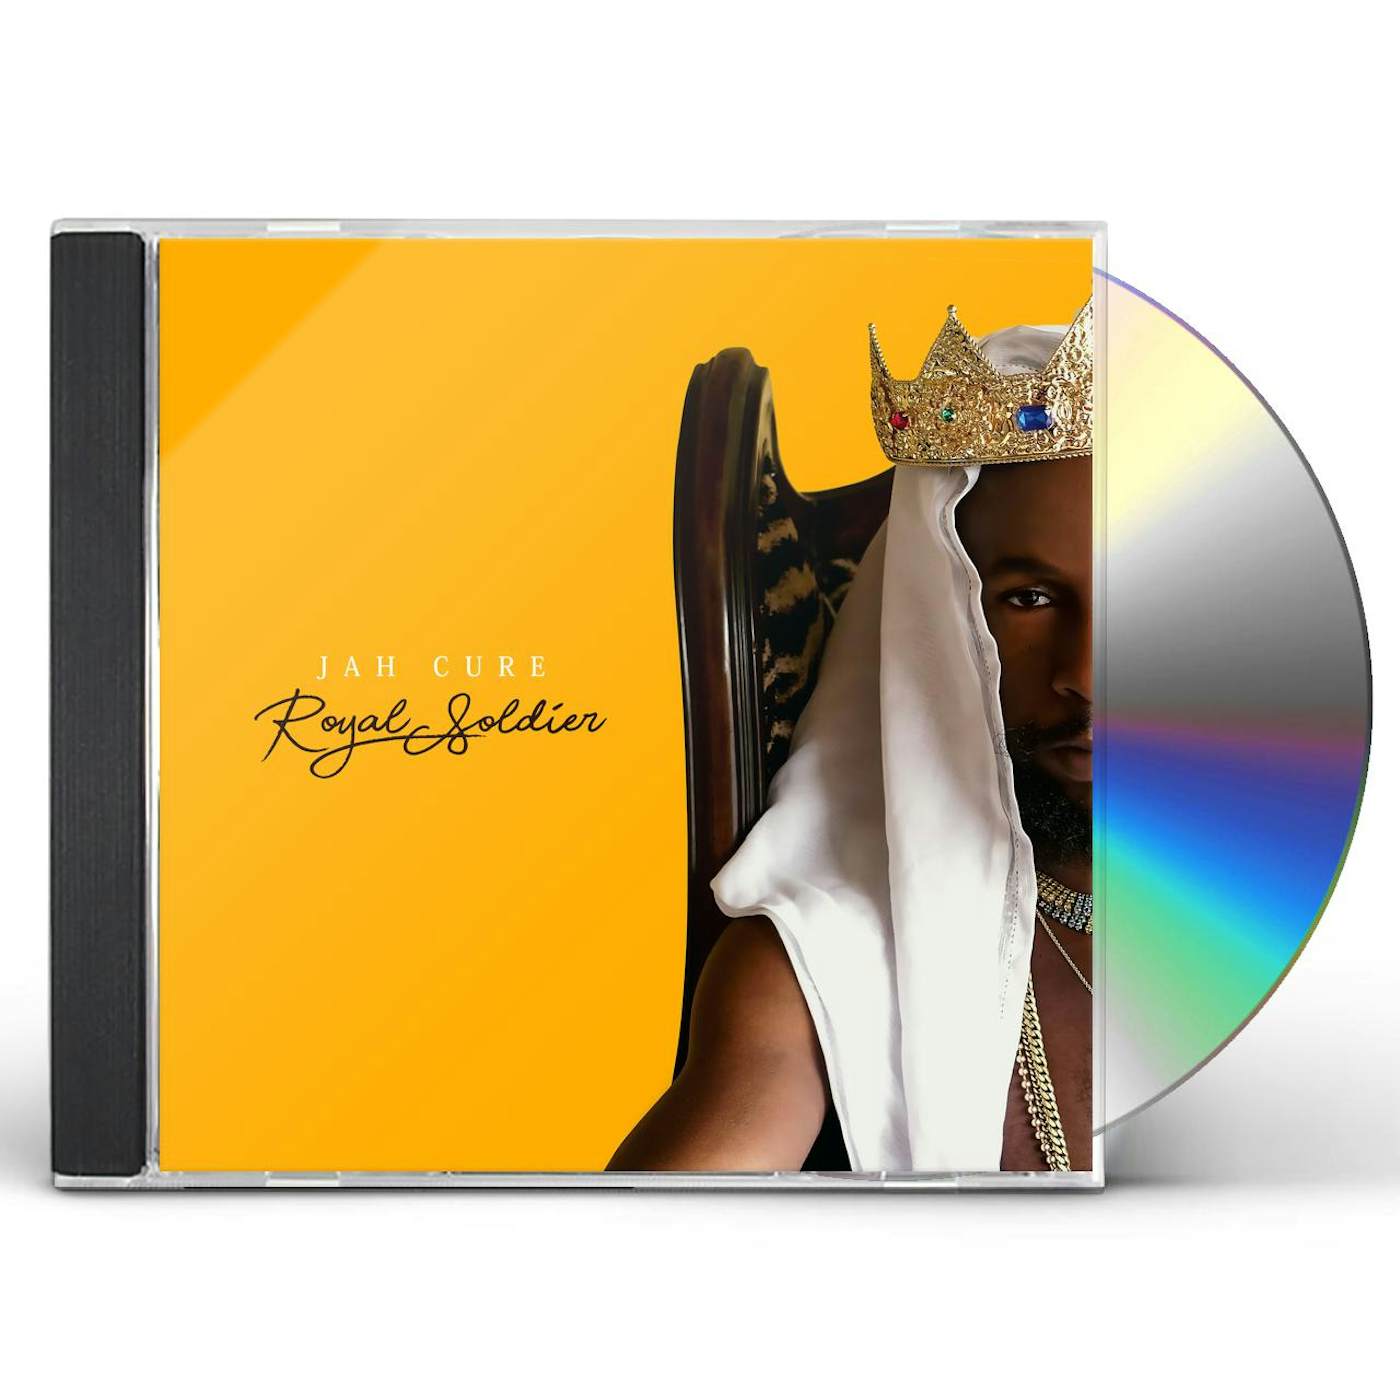 Jah Cure Royal soldier CD